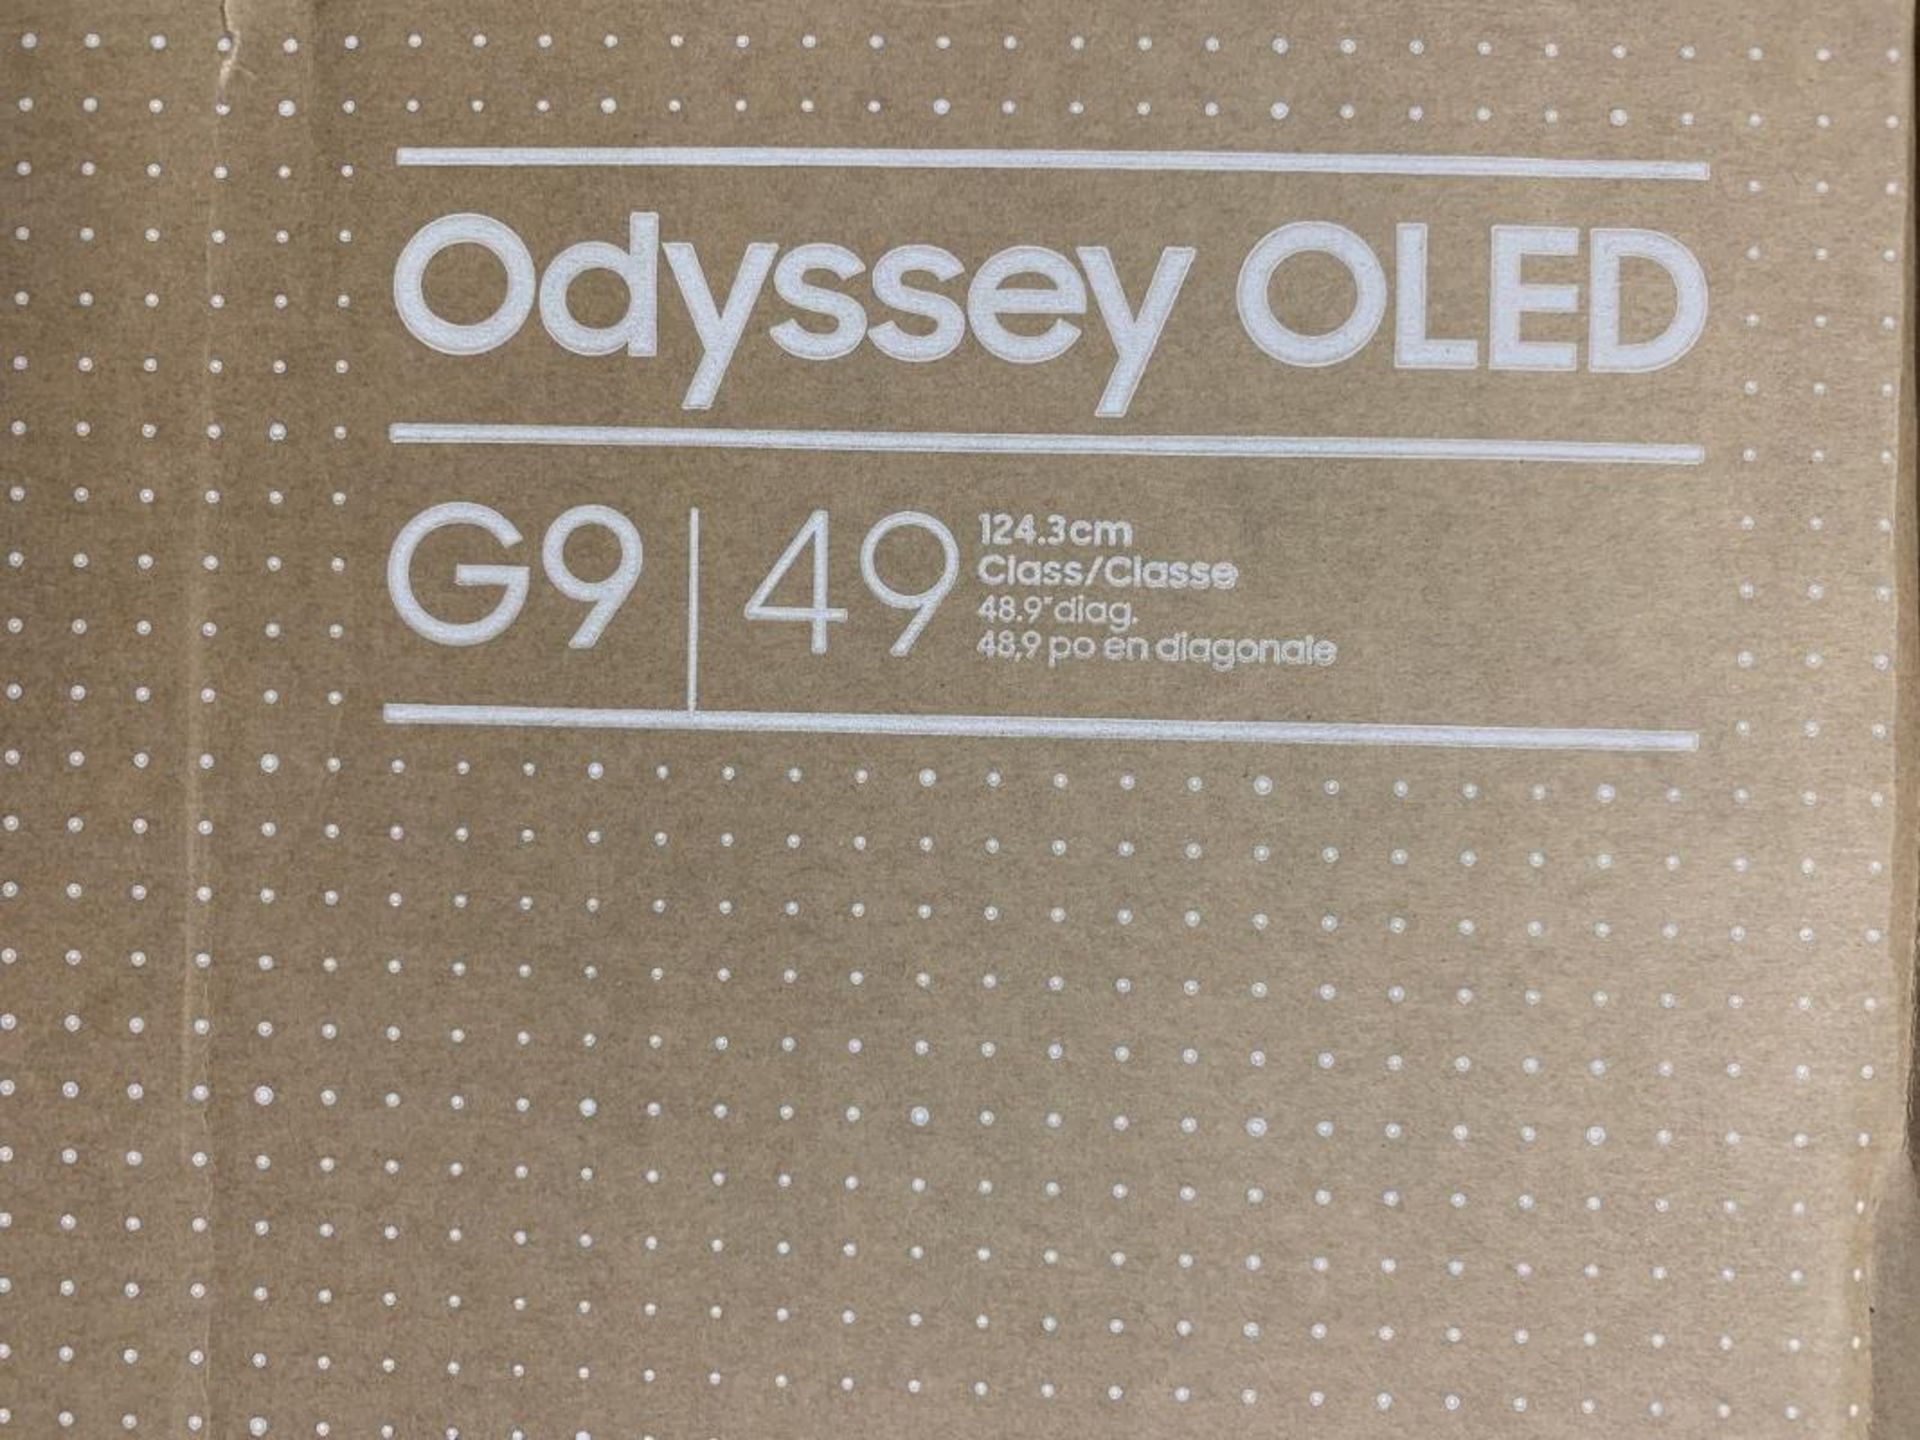 Samsung - Odyssey Oled - 49" G9 Gaming Monitor - Image 3 of 3